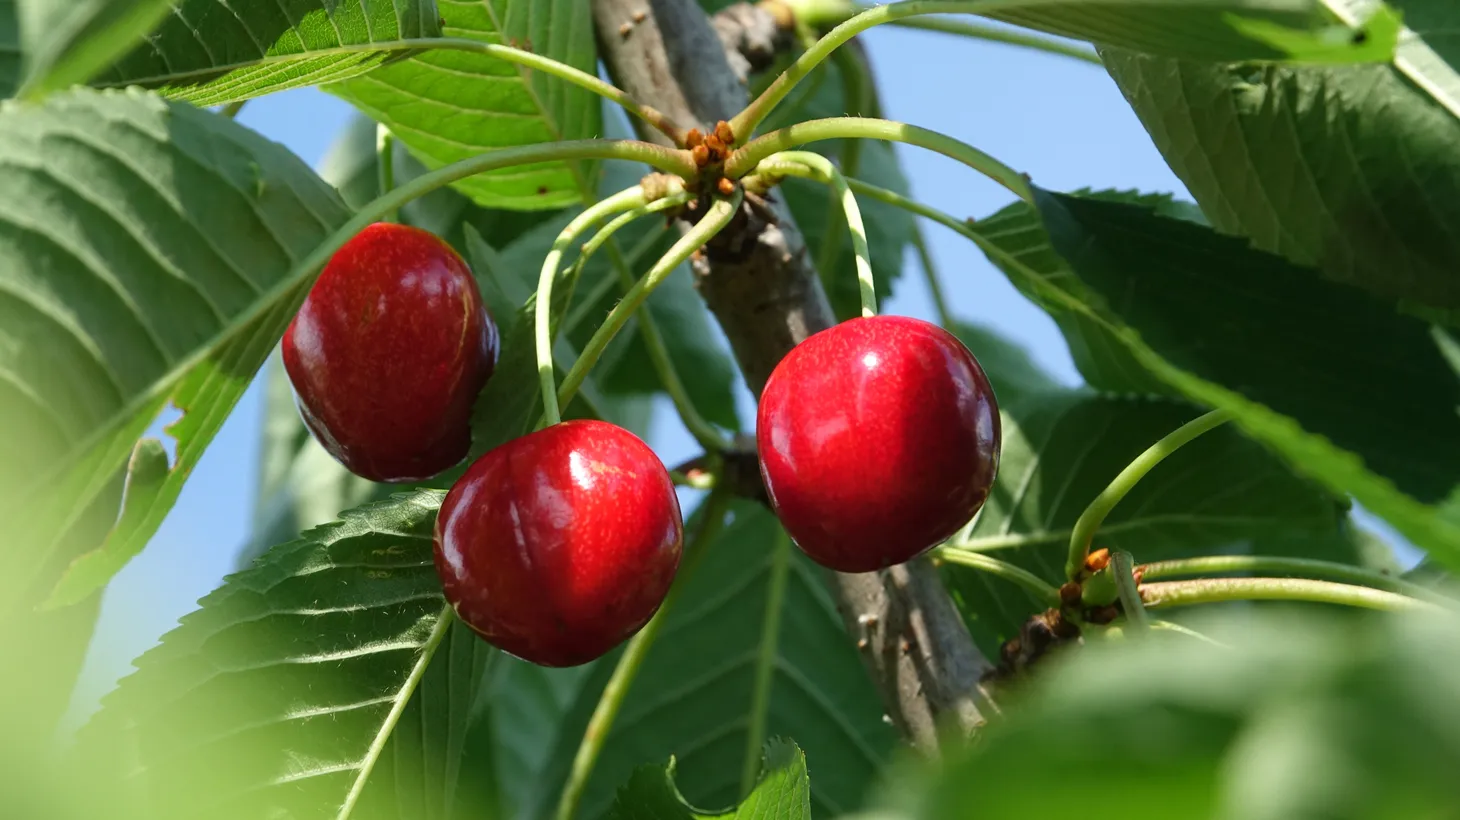 California cherries hang from a tree in Lodi.